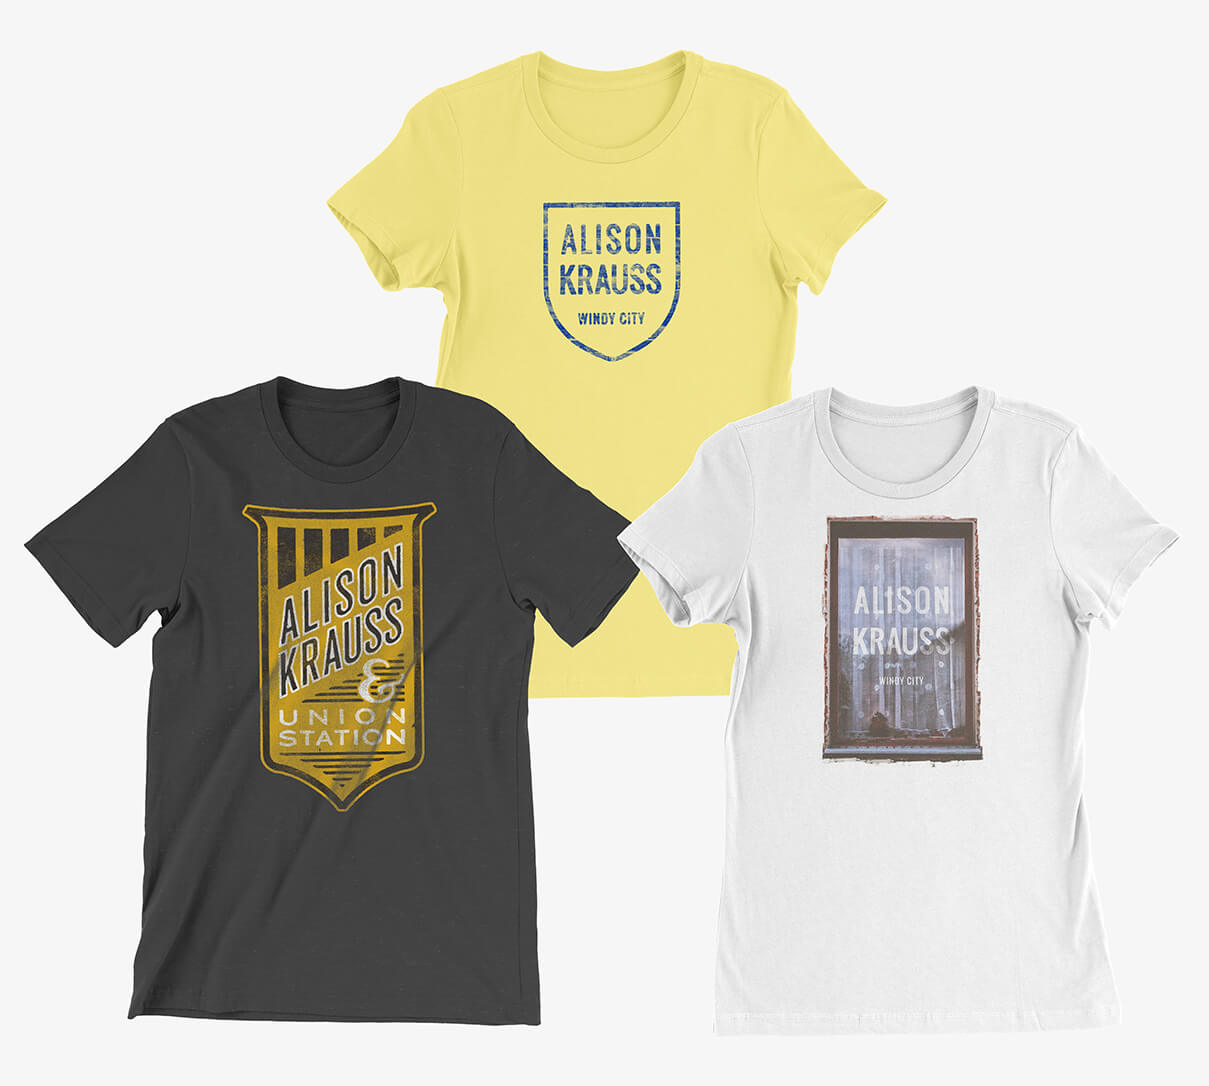 Alison Krauss and Union Station 2017 Windy City Tour Merchandise T-Shirts Women's and Unisex Textured Nostalgic Concert Shirts